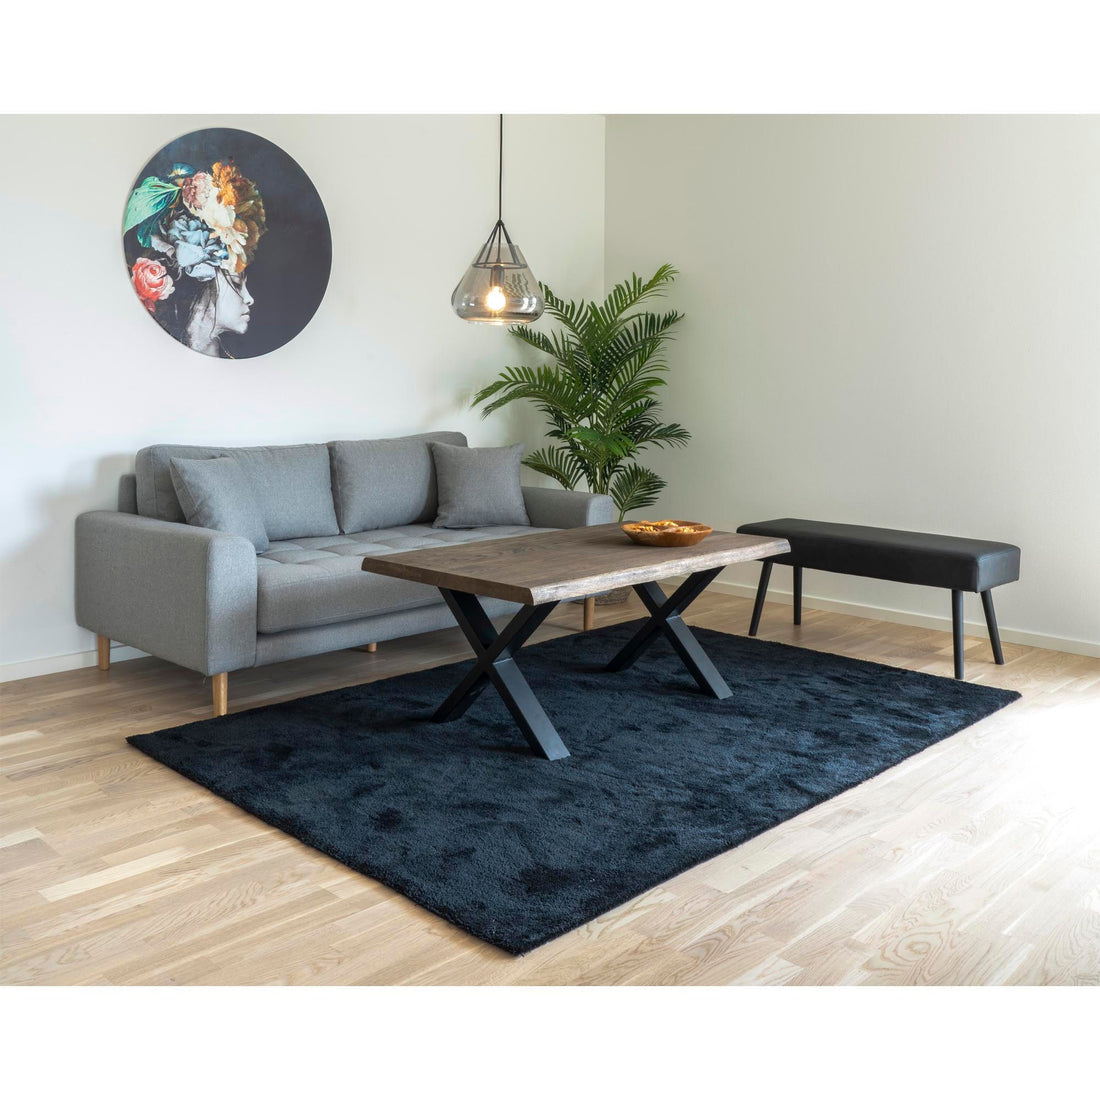 House Nordic - Lido 2.5 -person sofa